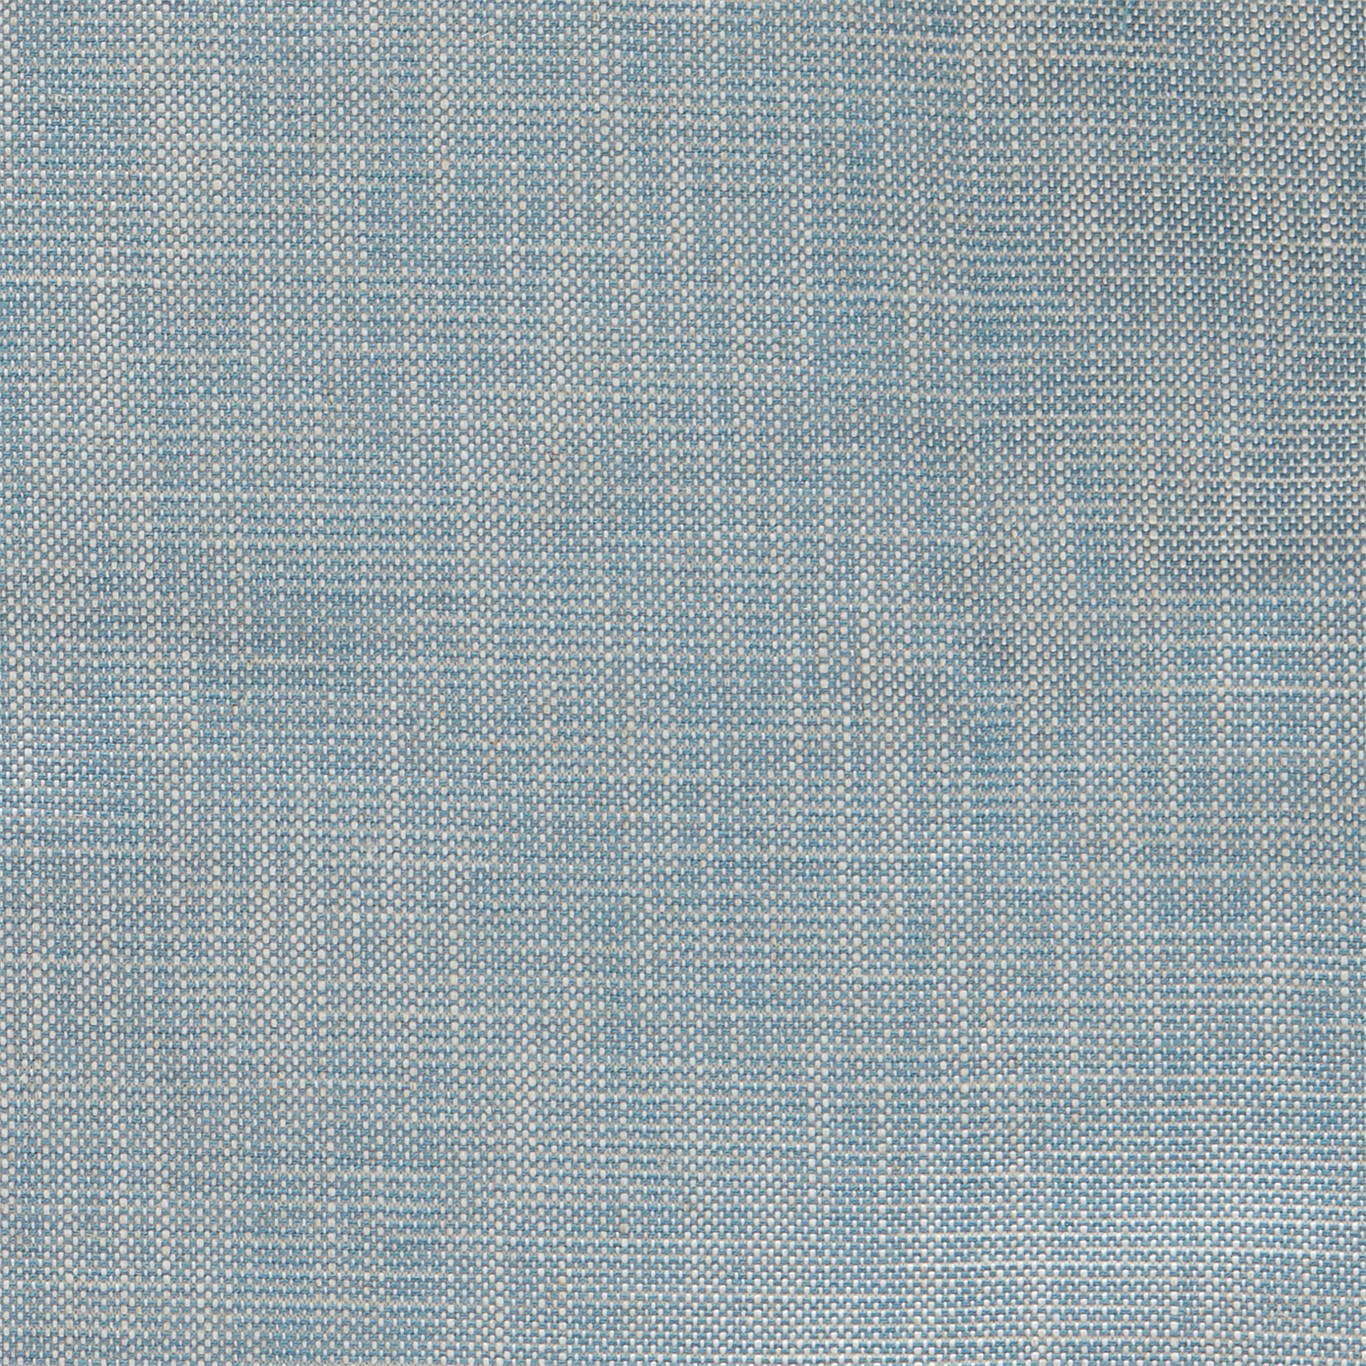 Lowen Denim Fabric by SAN